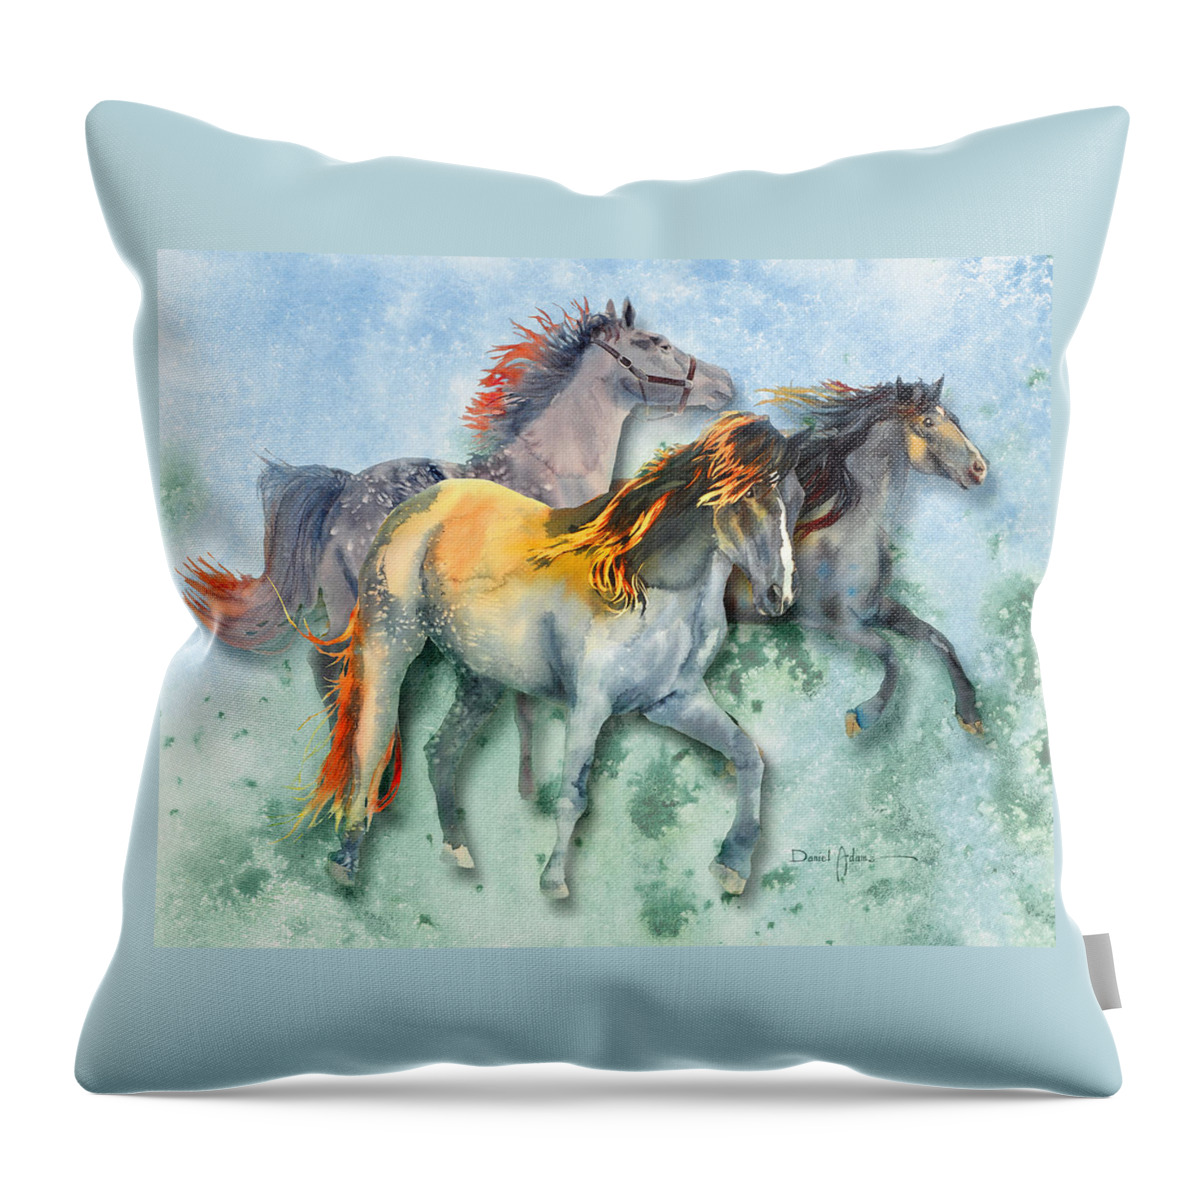 Horse Throw Pillow featuring the painting Multi-Horses Daniel Adams by Daniel Adams